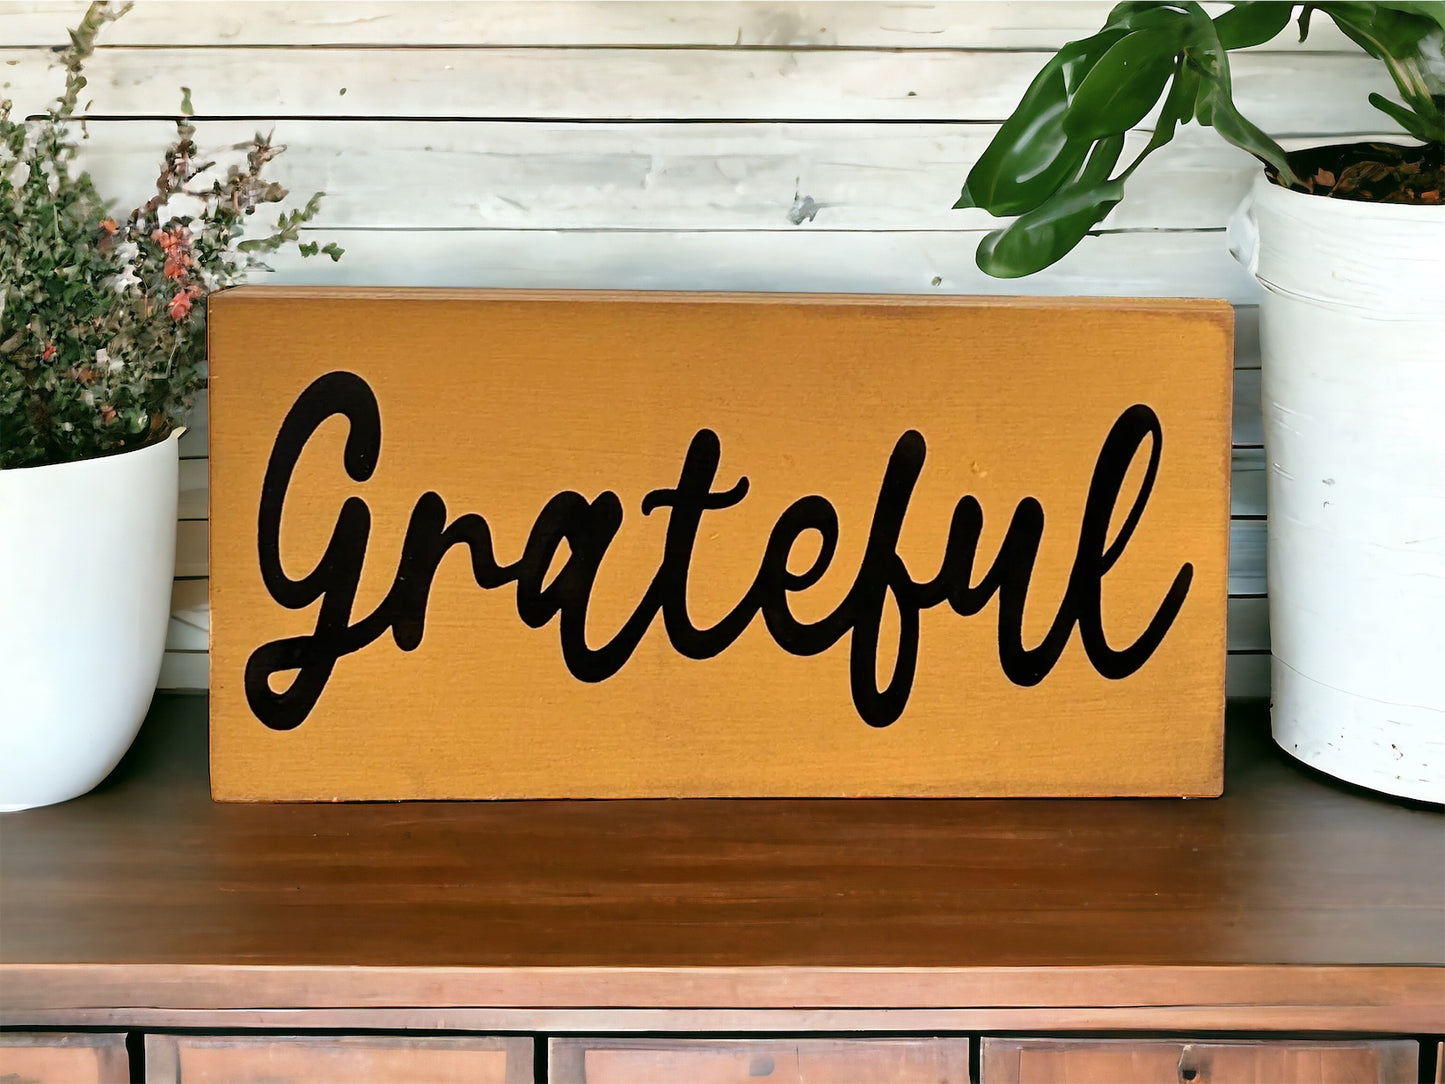 "Grateful" wood sign